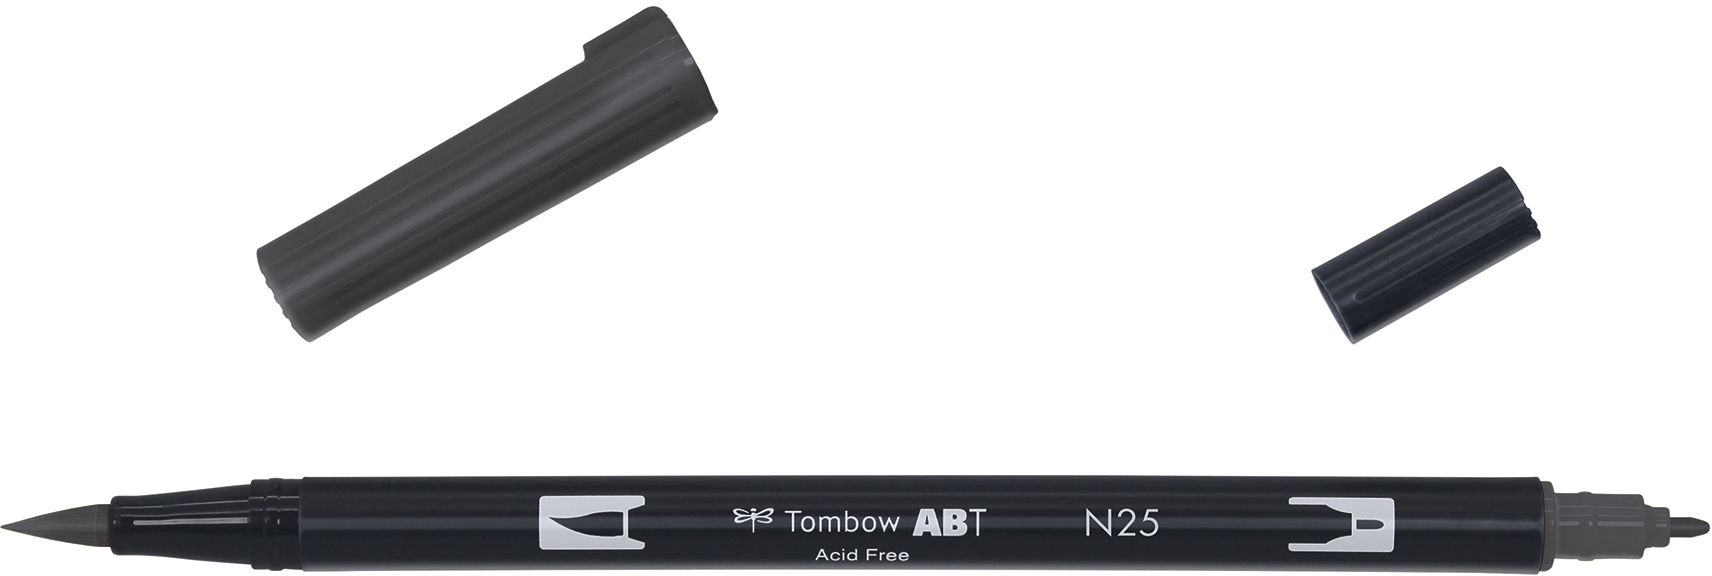 TOMBOW Dual Brush Pen ABT N25 lamp black